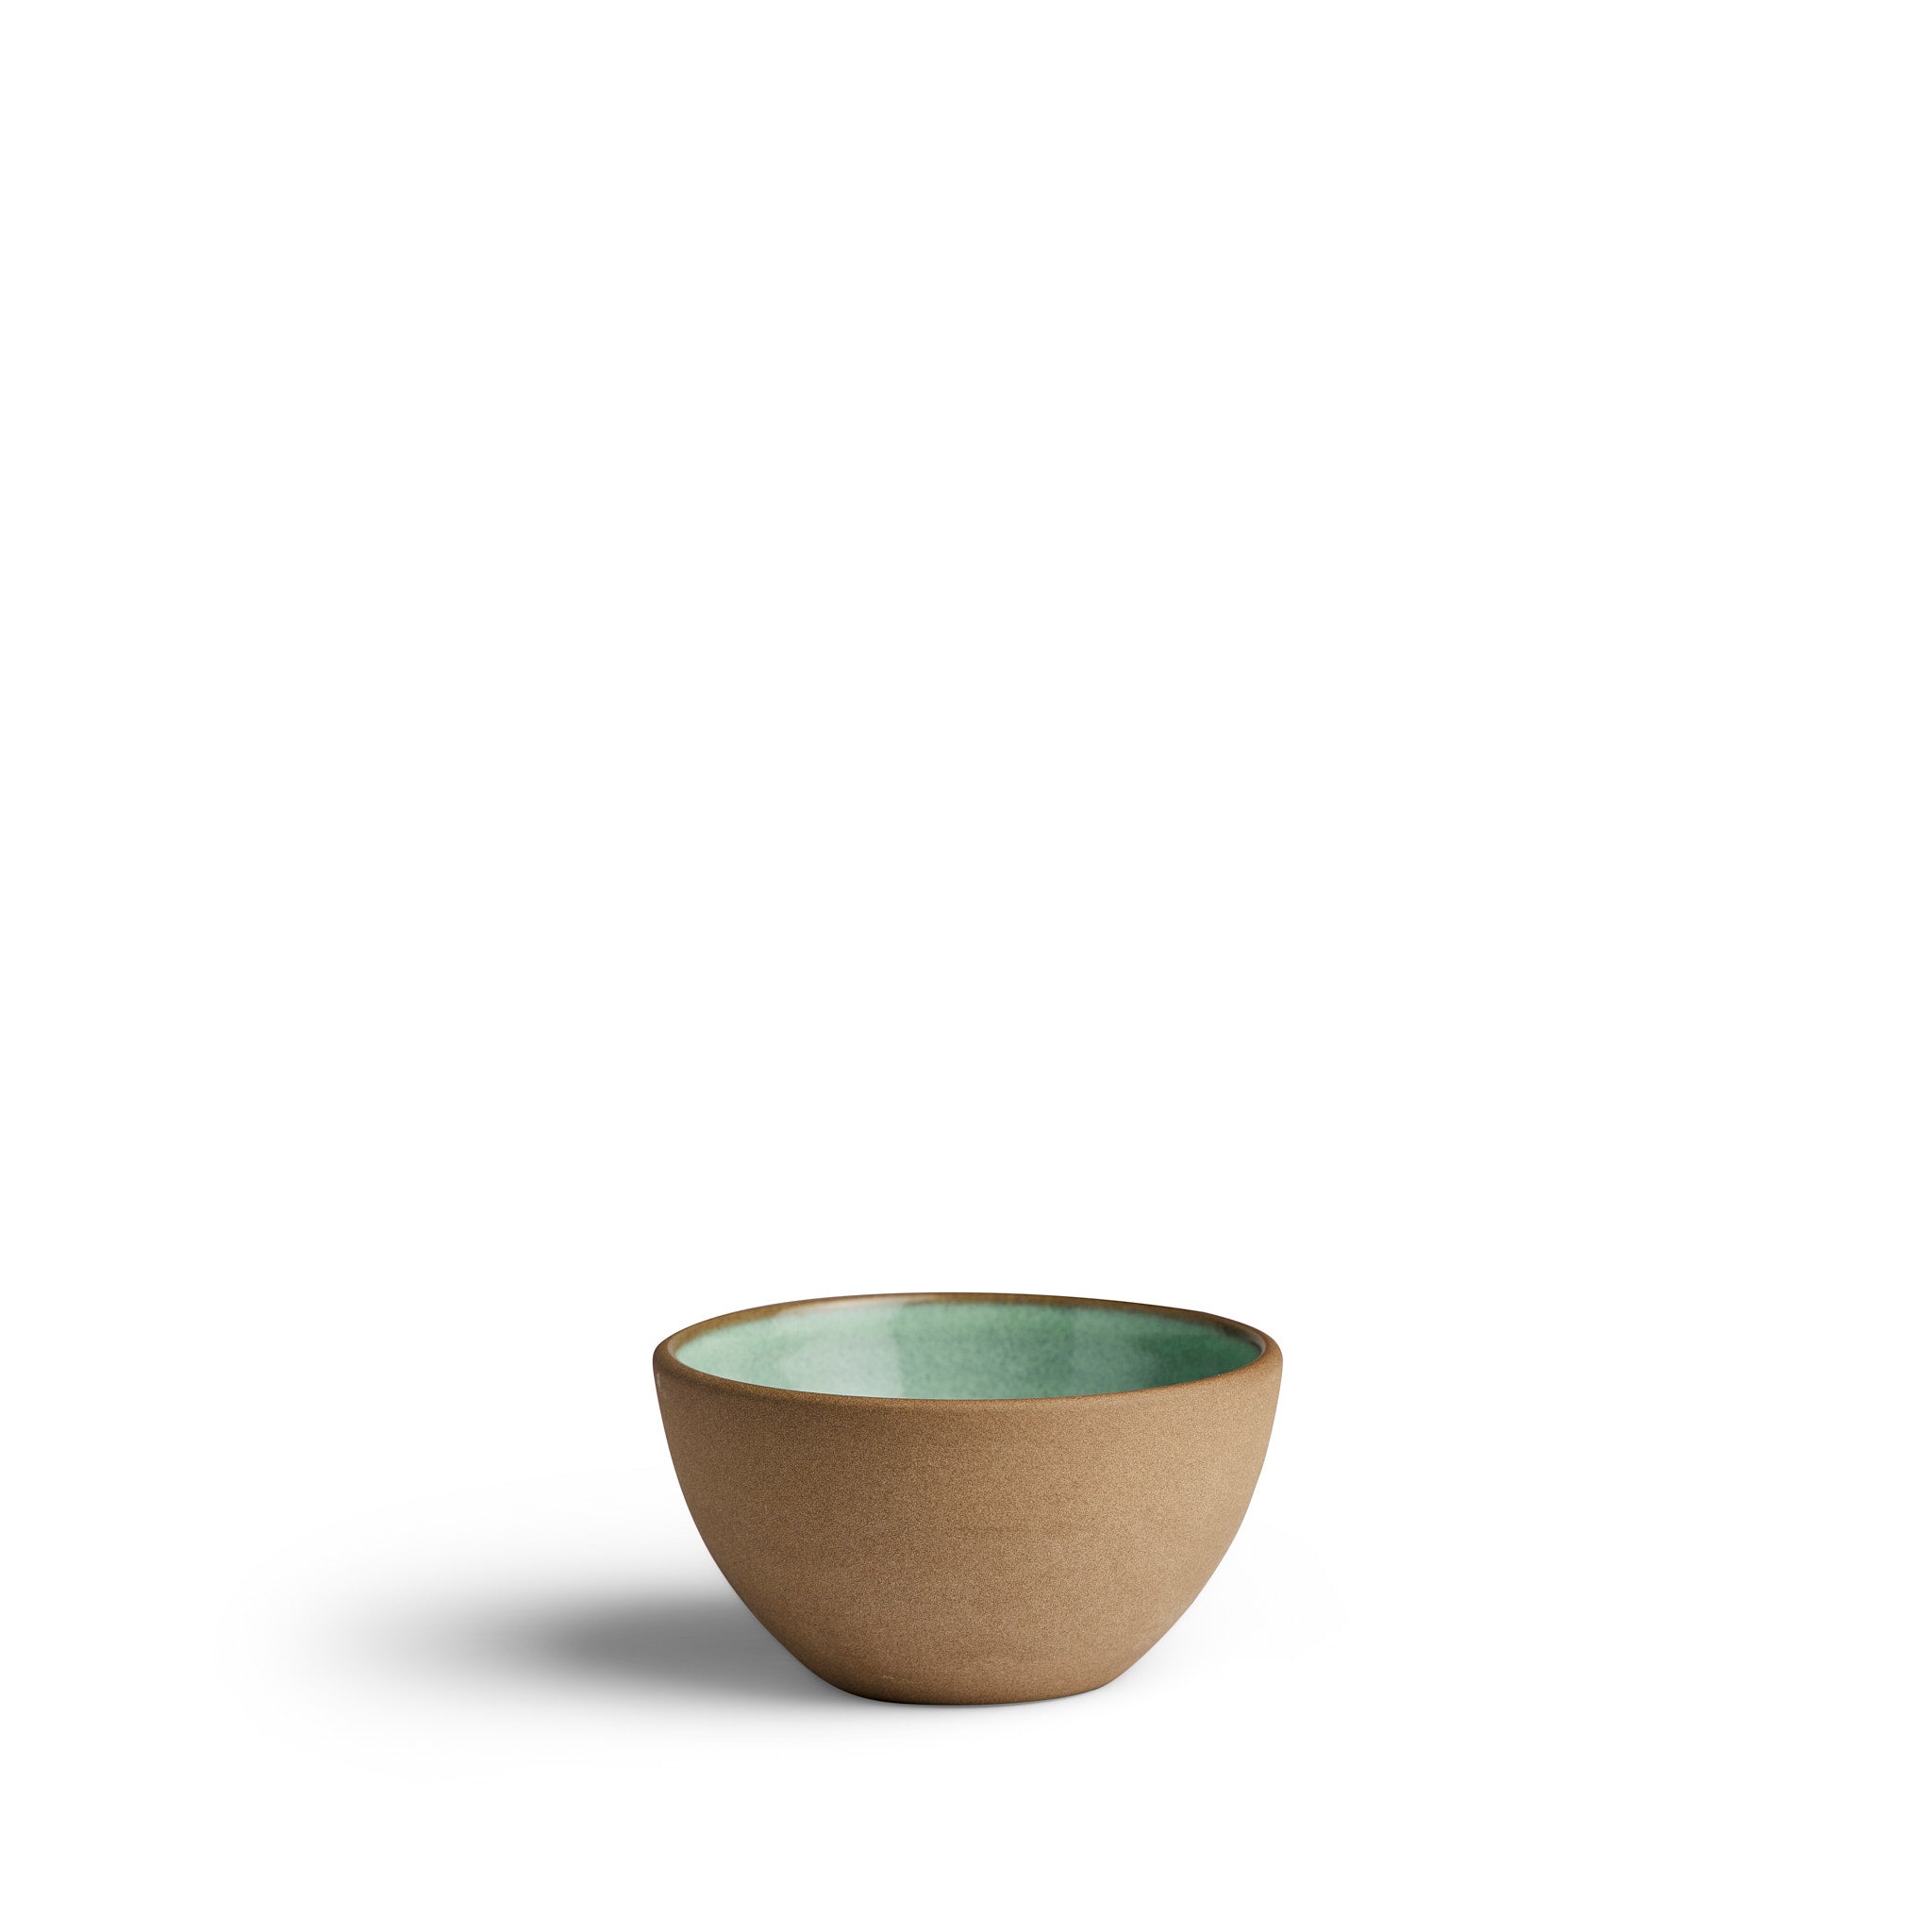 Plaza Desert Bowl in Kitchen Green/Natural Zoom Image 1